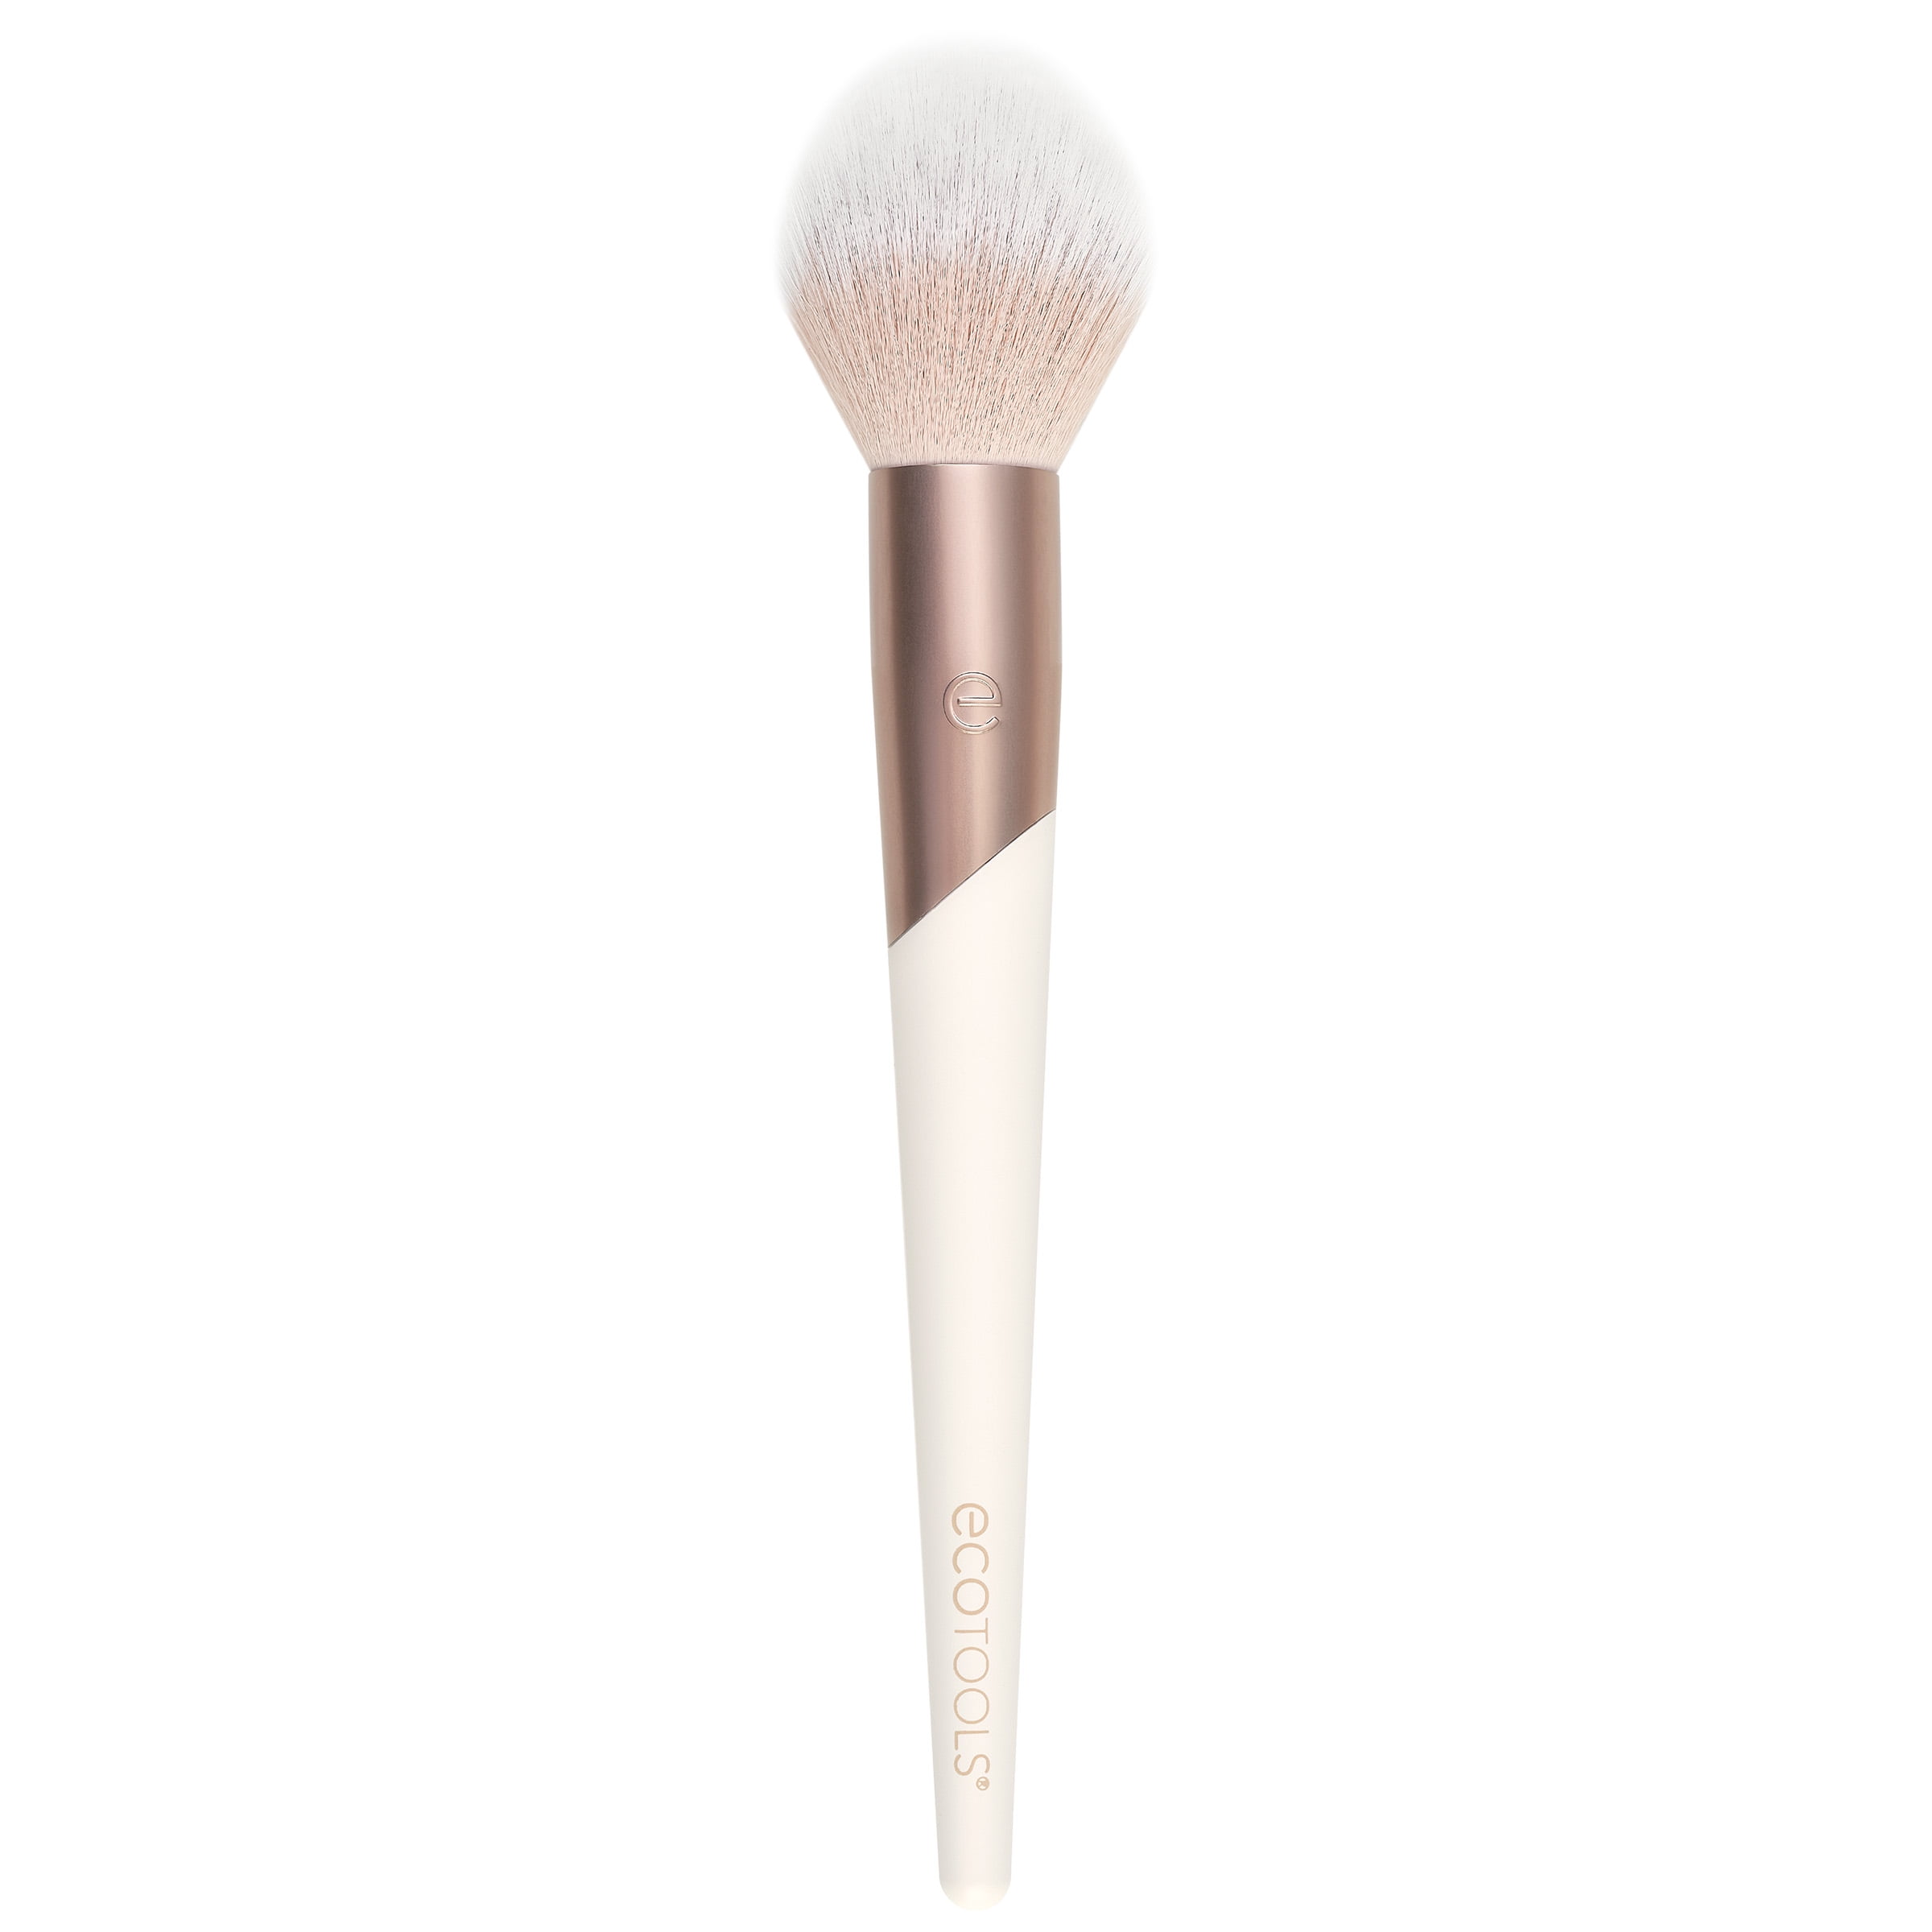 EcoTools Luxe Professional Plush Powder Makeup Brush, 1 Count